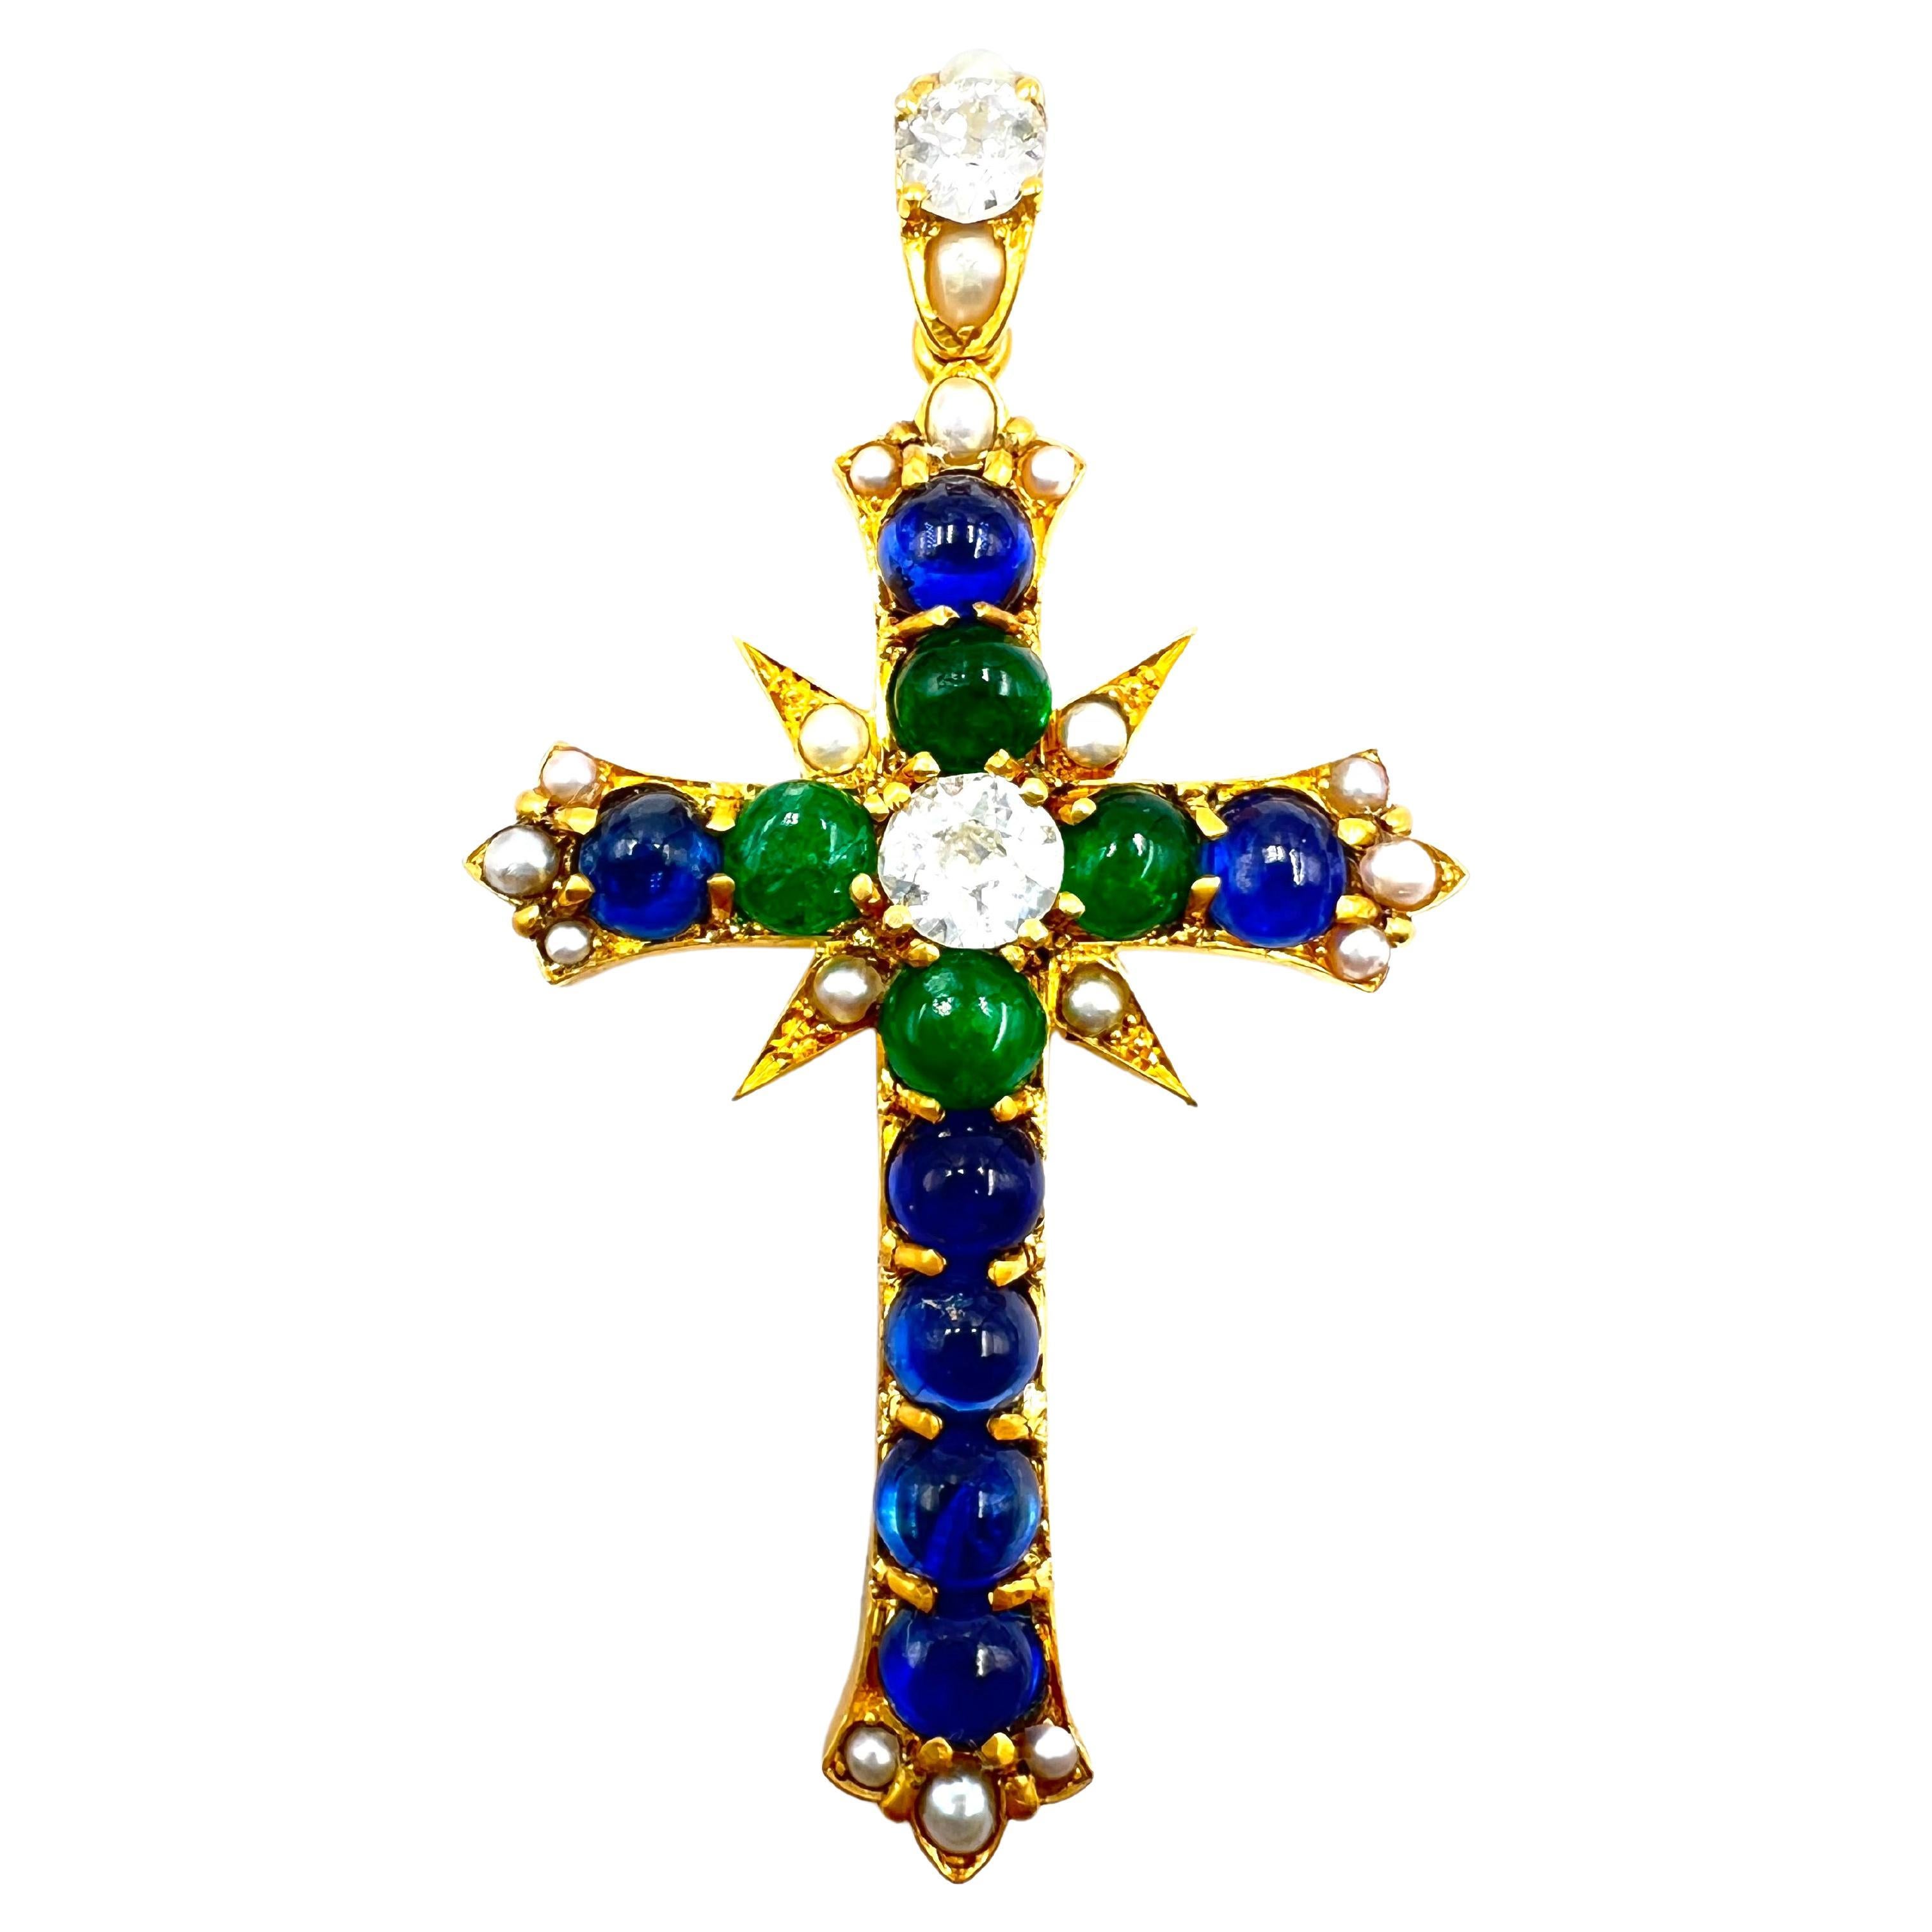 Antique Sapphire, Emerald and Diamond Cross Pendant